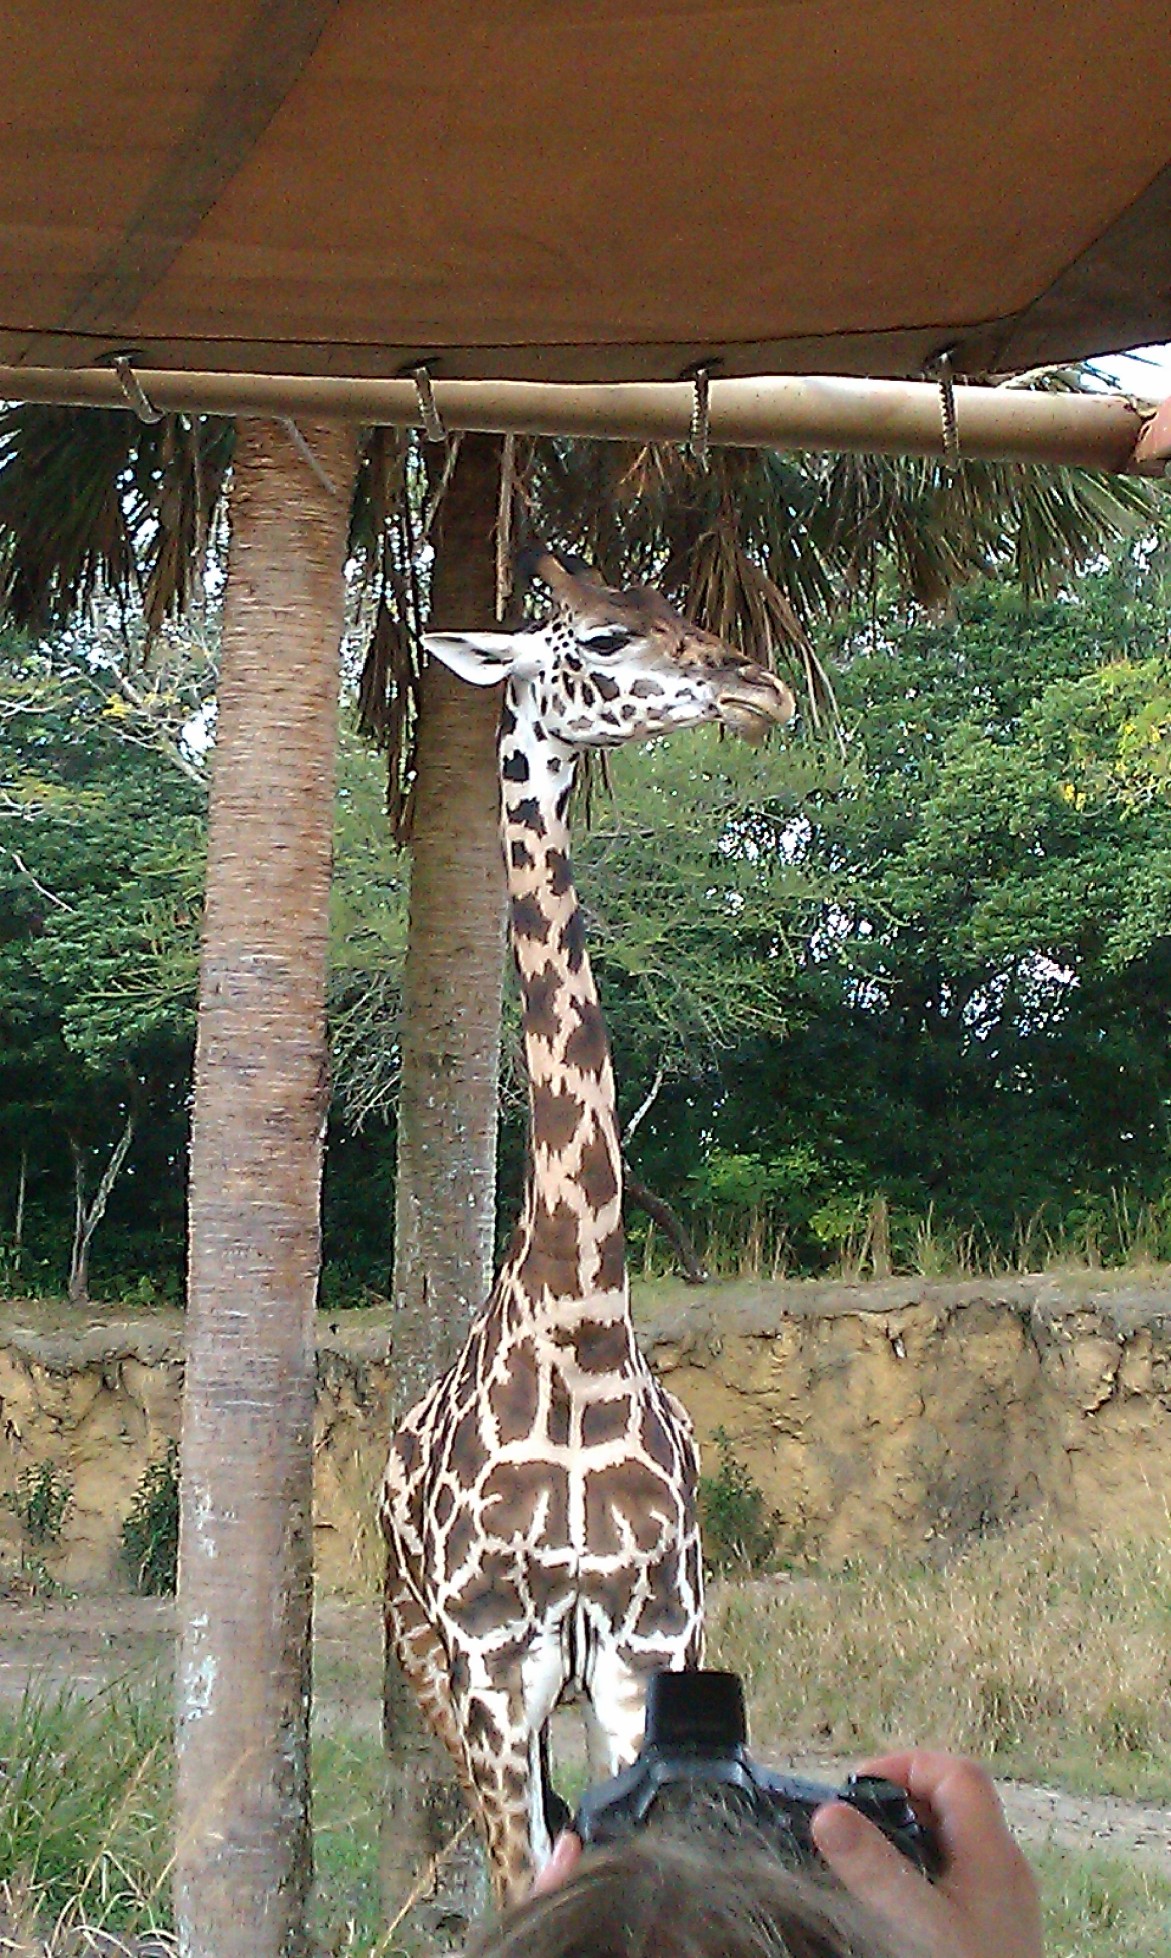 Those silly giraffes!